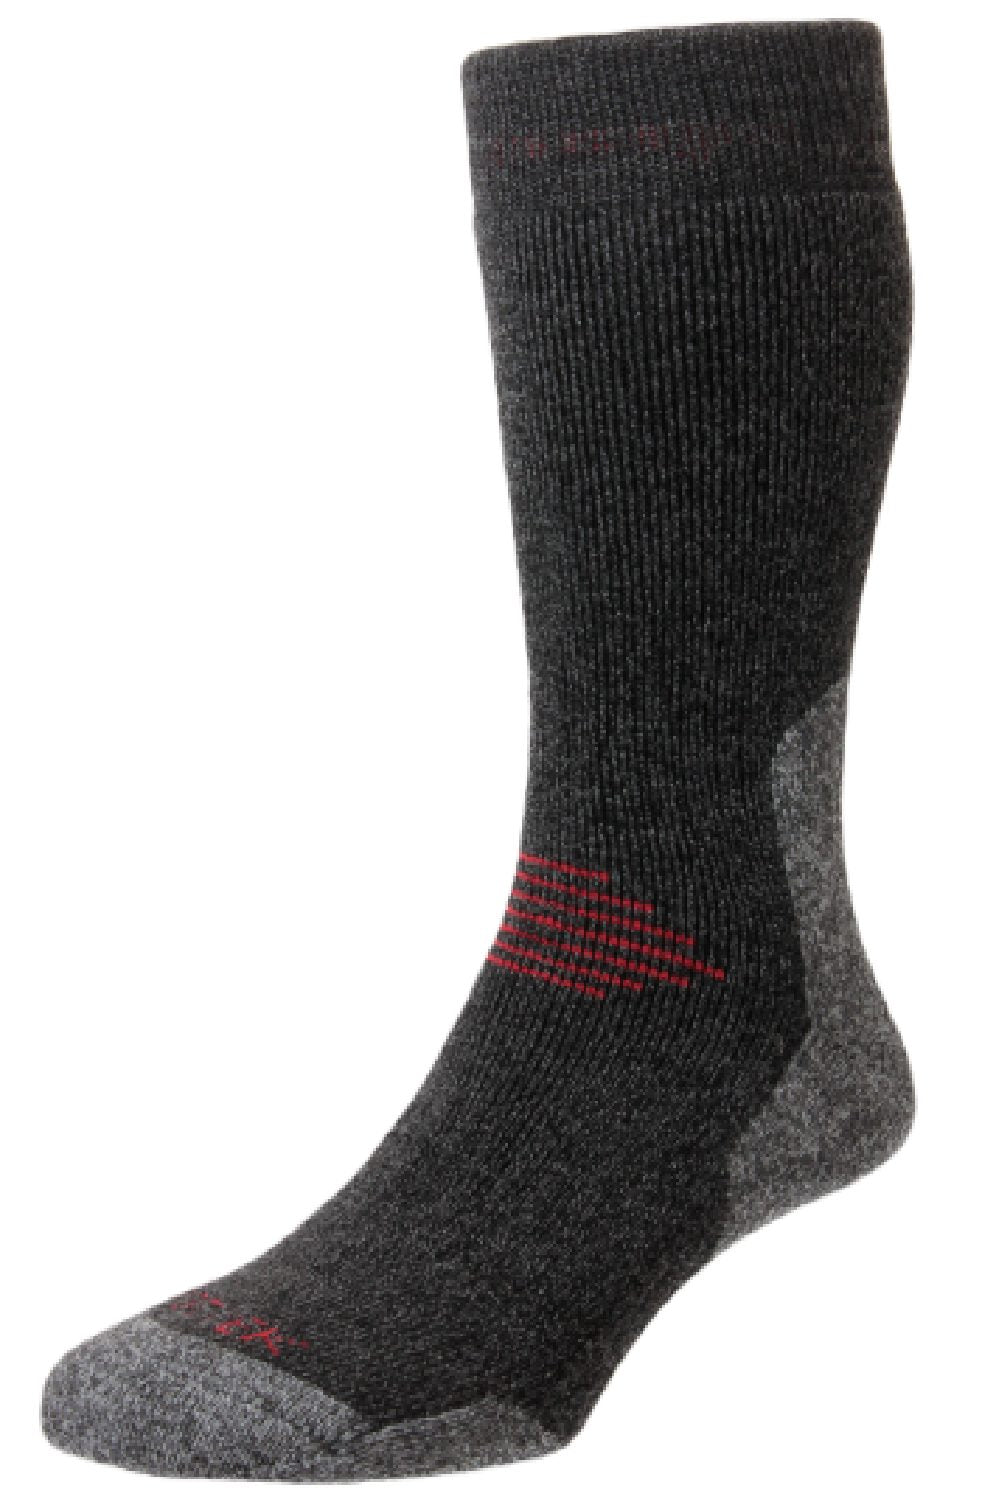 HJ Hall ProTrek Mountain Climb Sock in Slate/Grey 